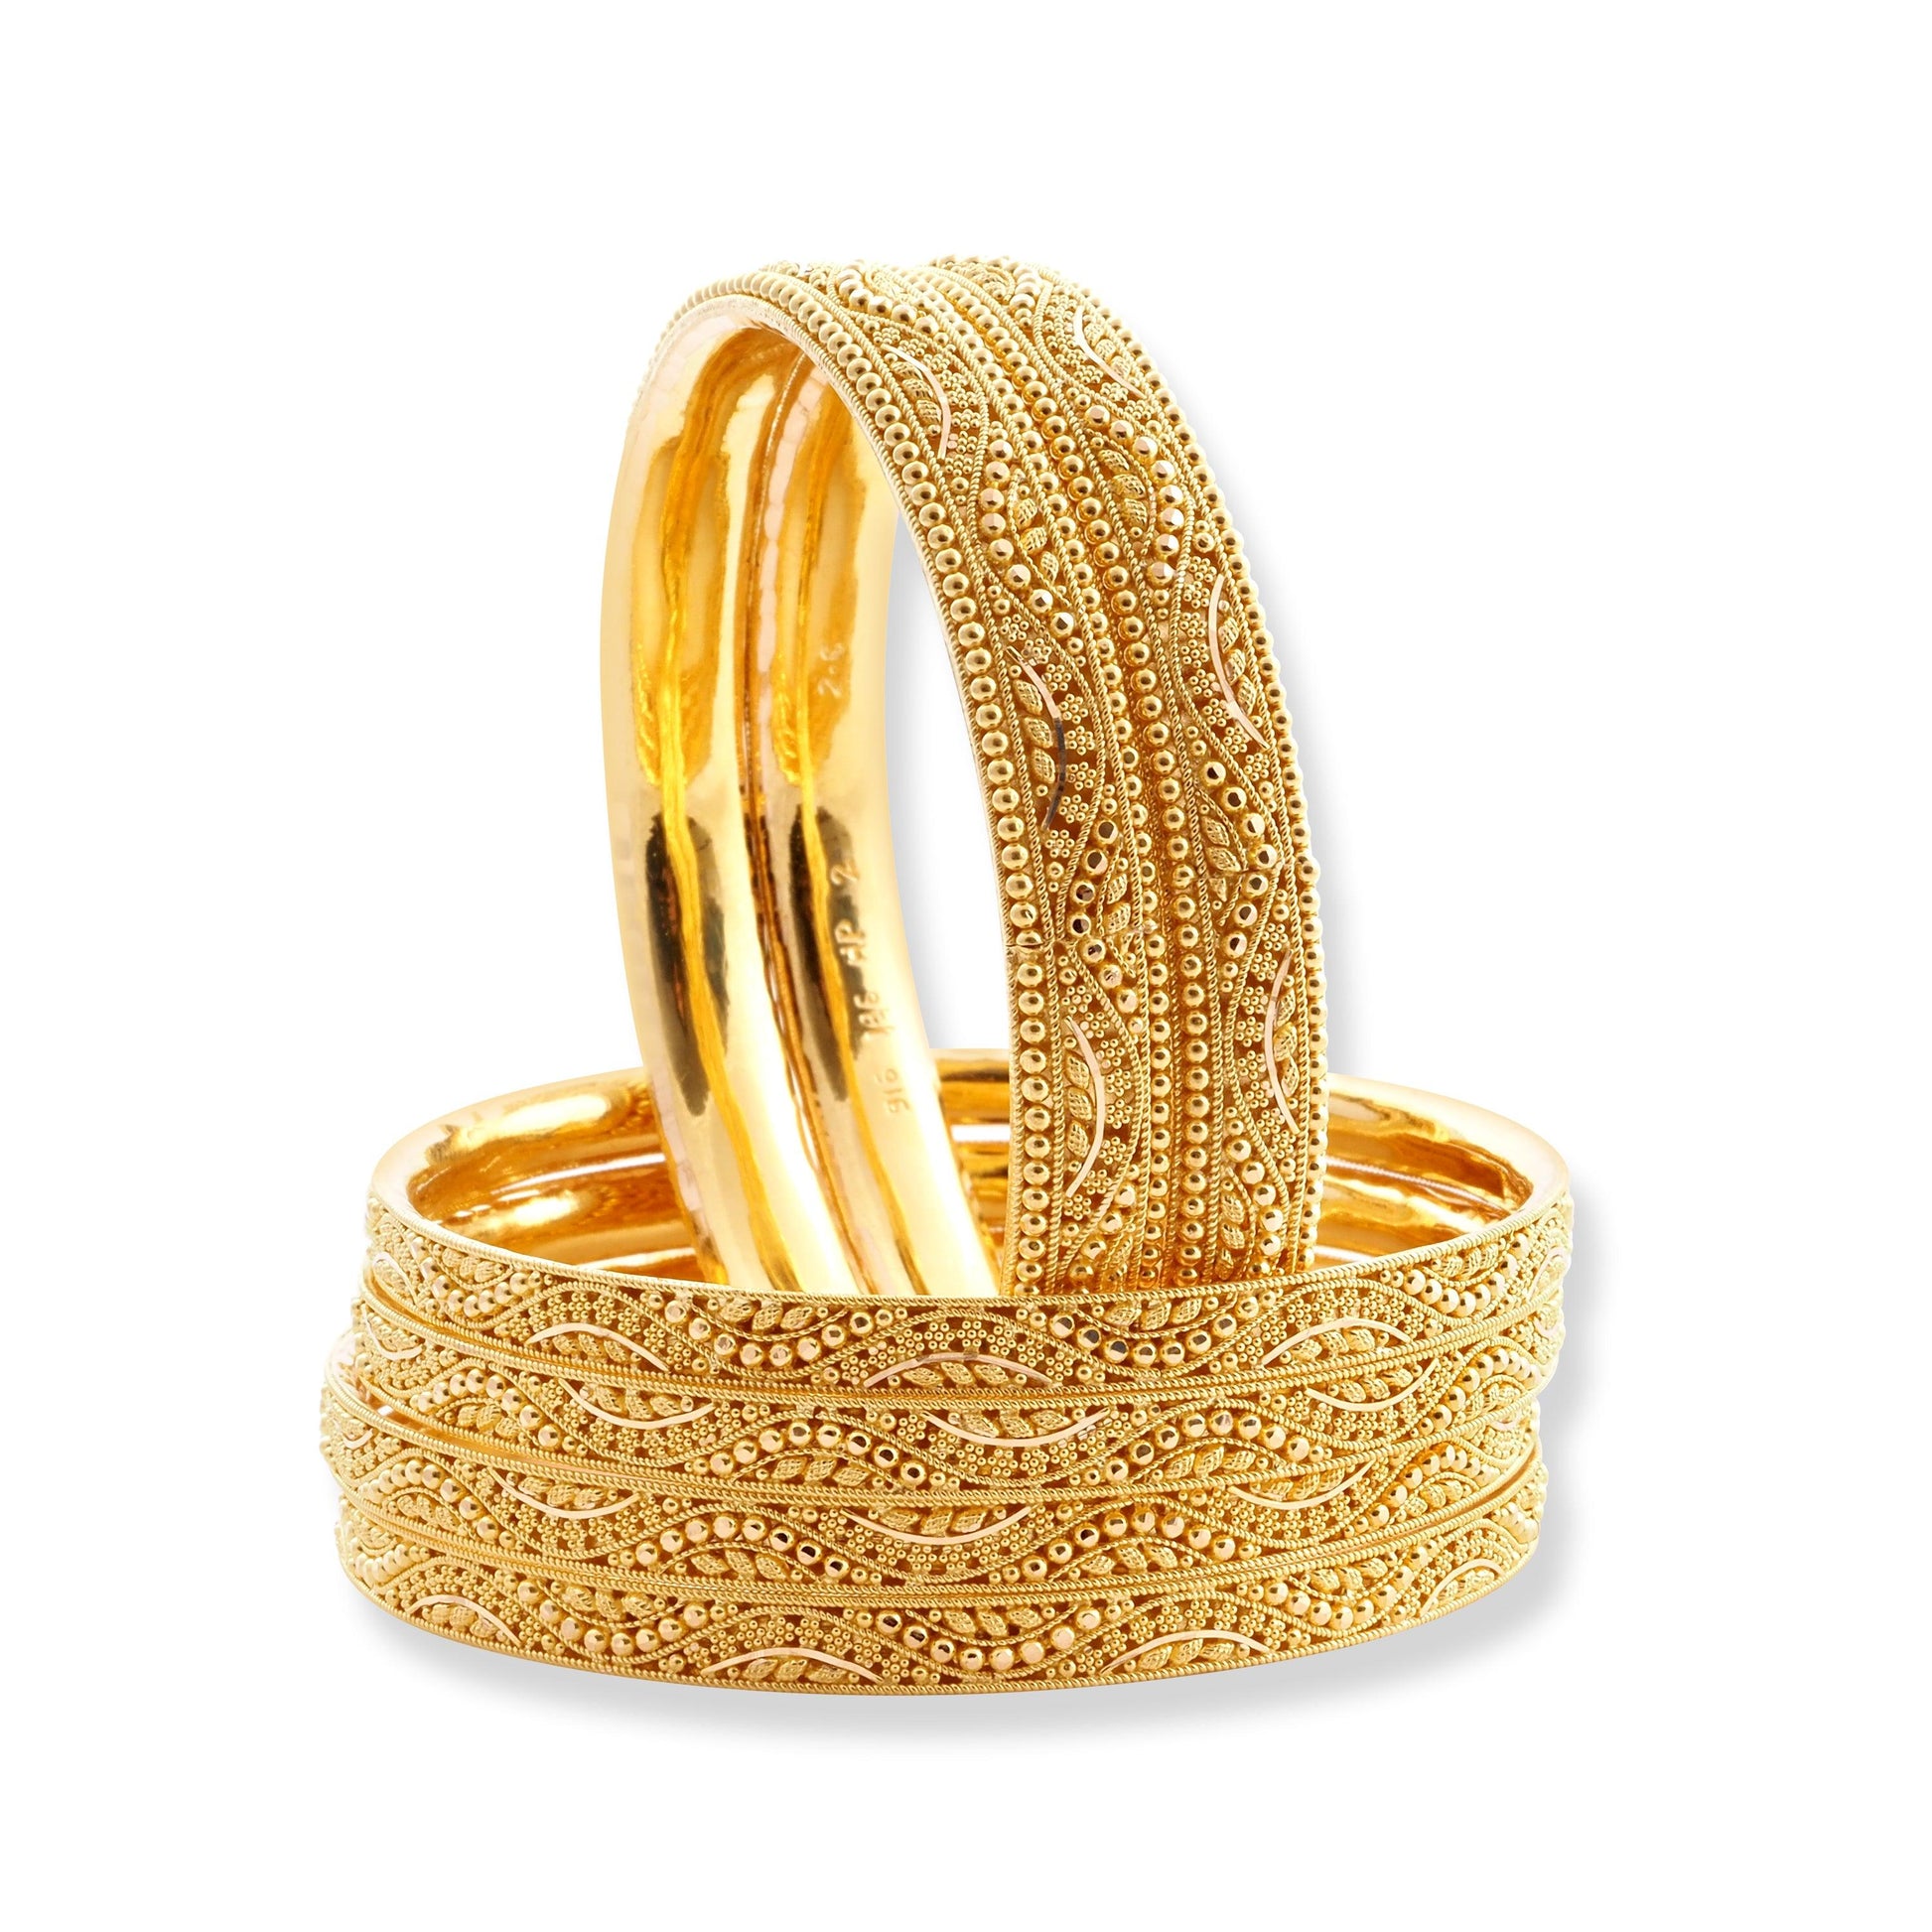 Set of Six 22ct Gold Bangles with Diamond Cut Bead Design B-8569 - Minar Jewellers